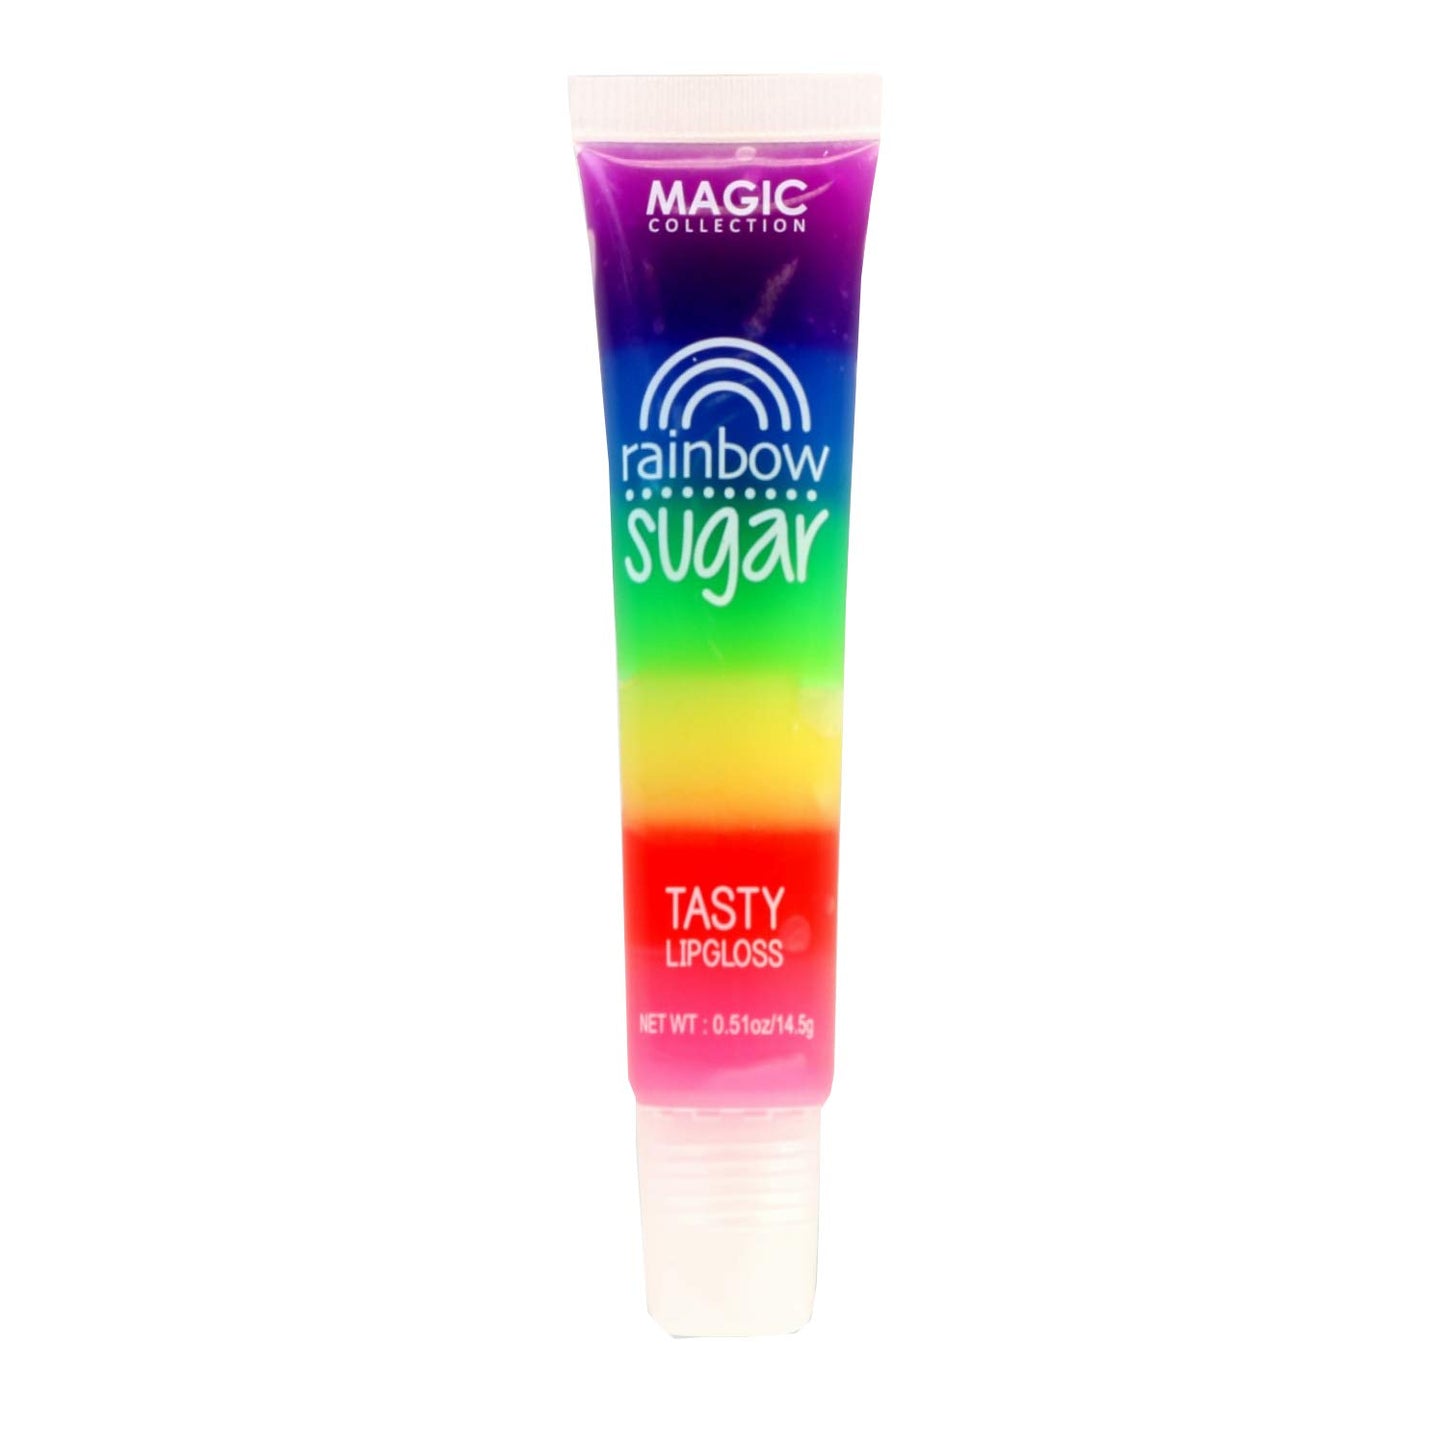 Rainbow sugar lip gloss